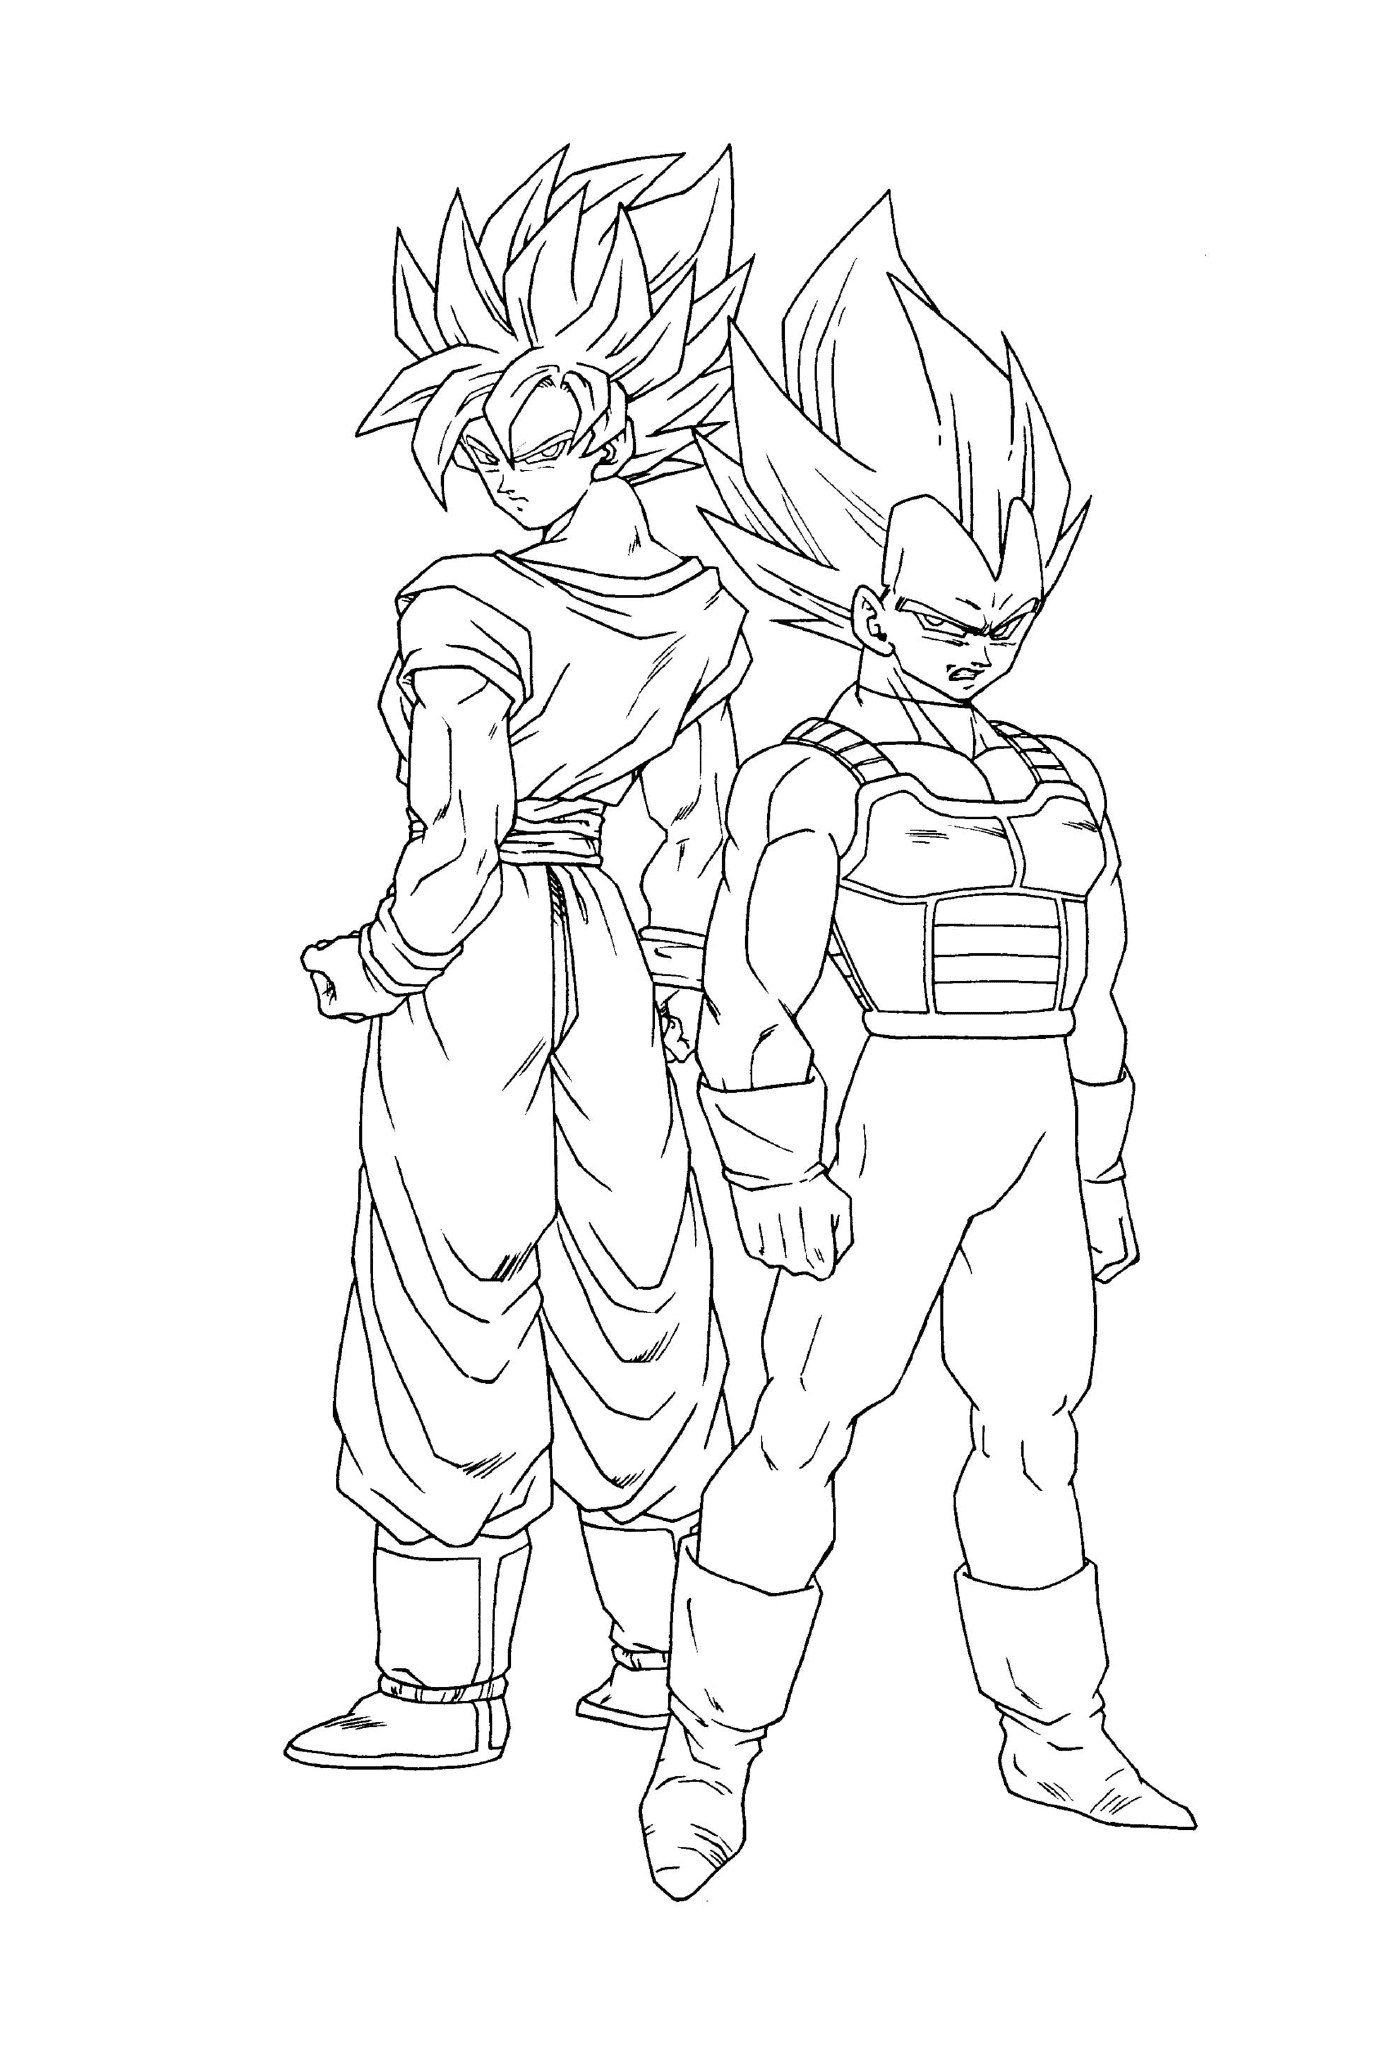   Goku et son frère Vegeta de Dragon Ball Z 